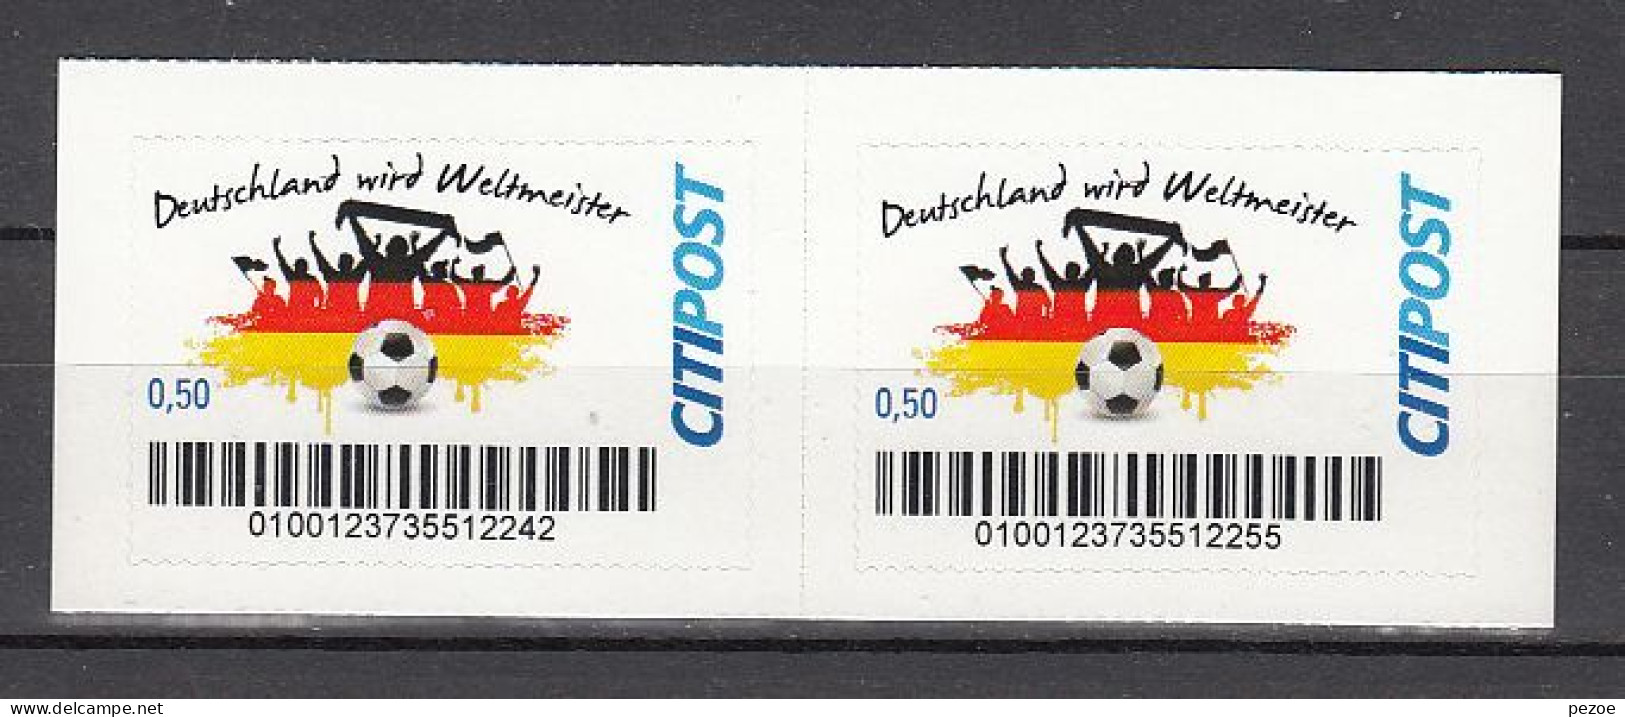 Football / Soccer / Fussball - WM 2014: Germany  PrivatPost ** - 2014 – Brazil